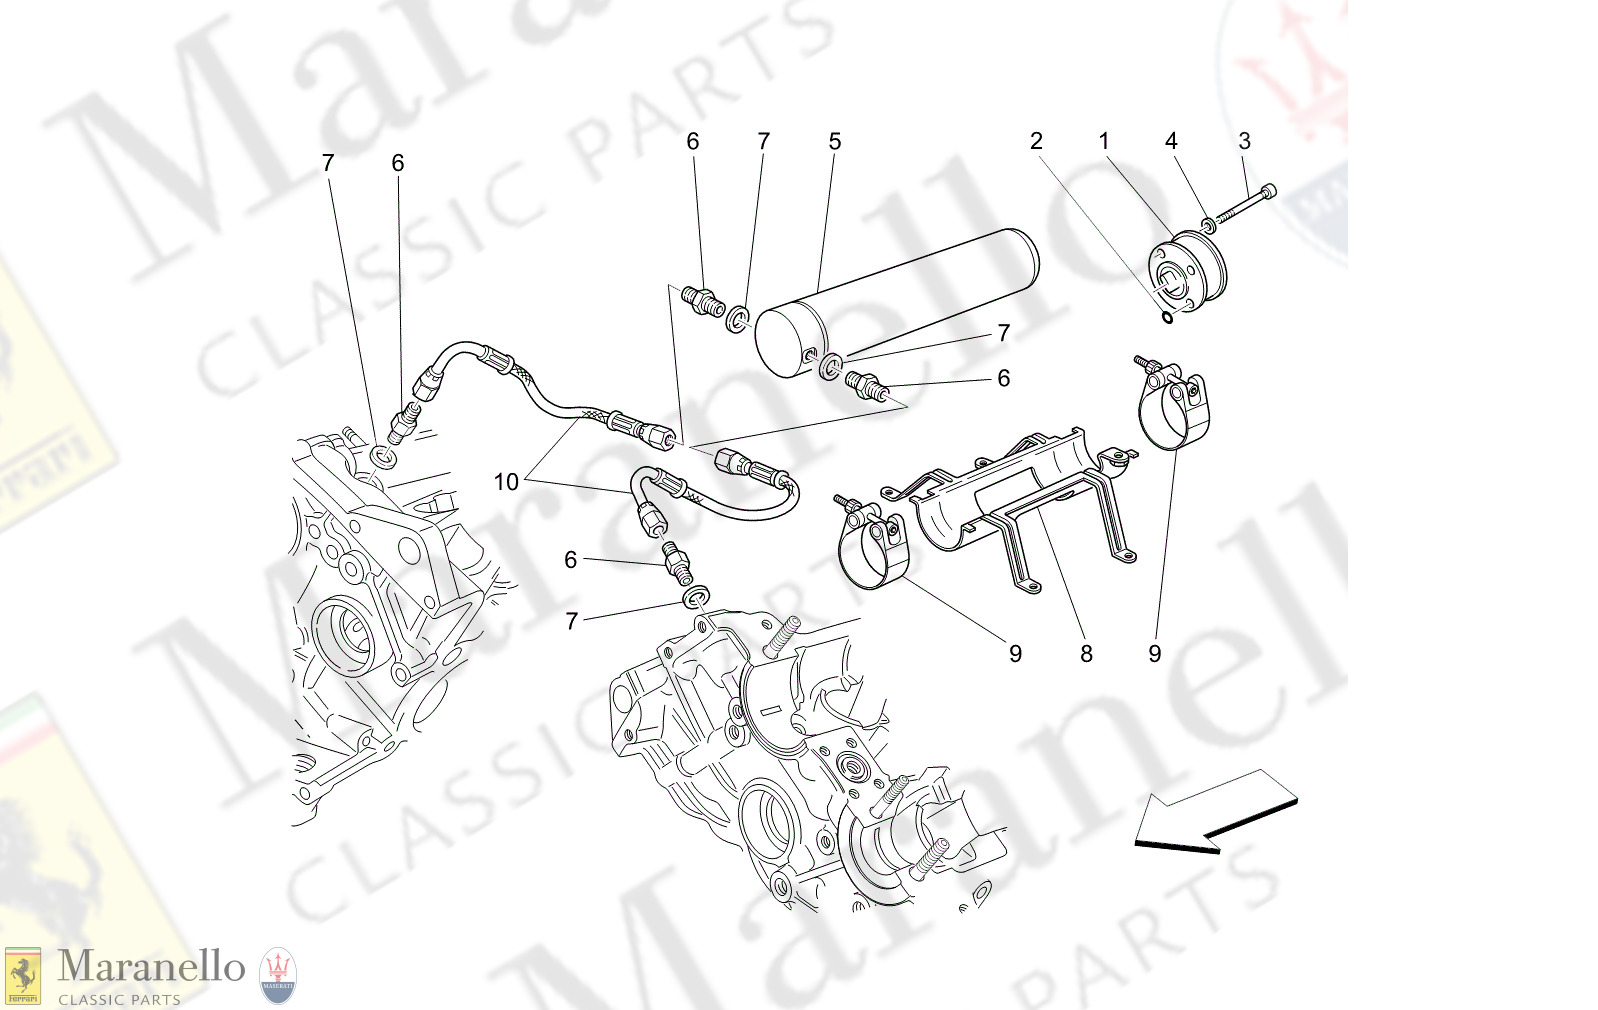 08.60 - 11 - 0860 - 11 Main Wiring parts diagram for Maserati